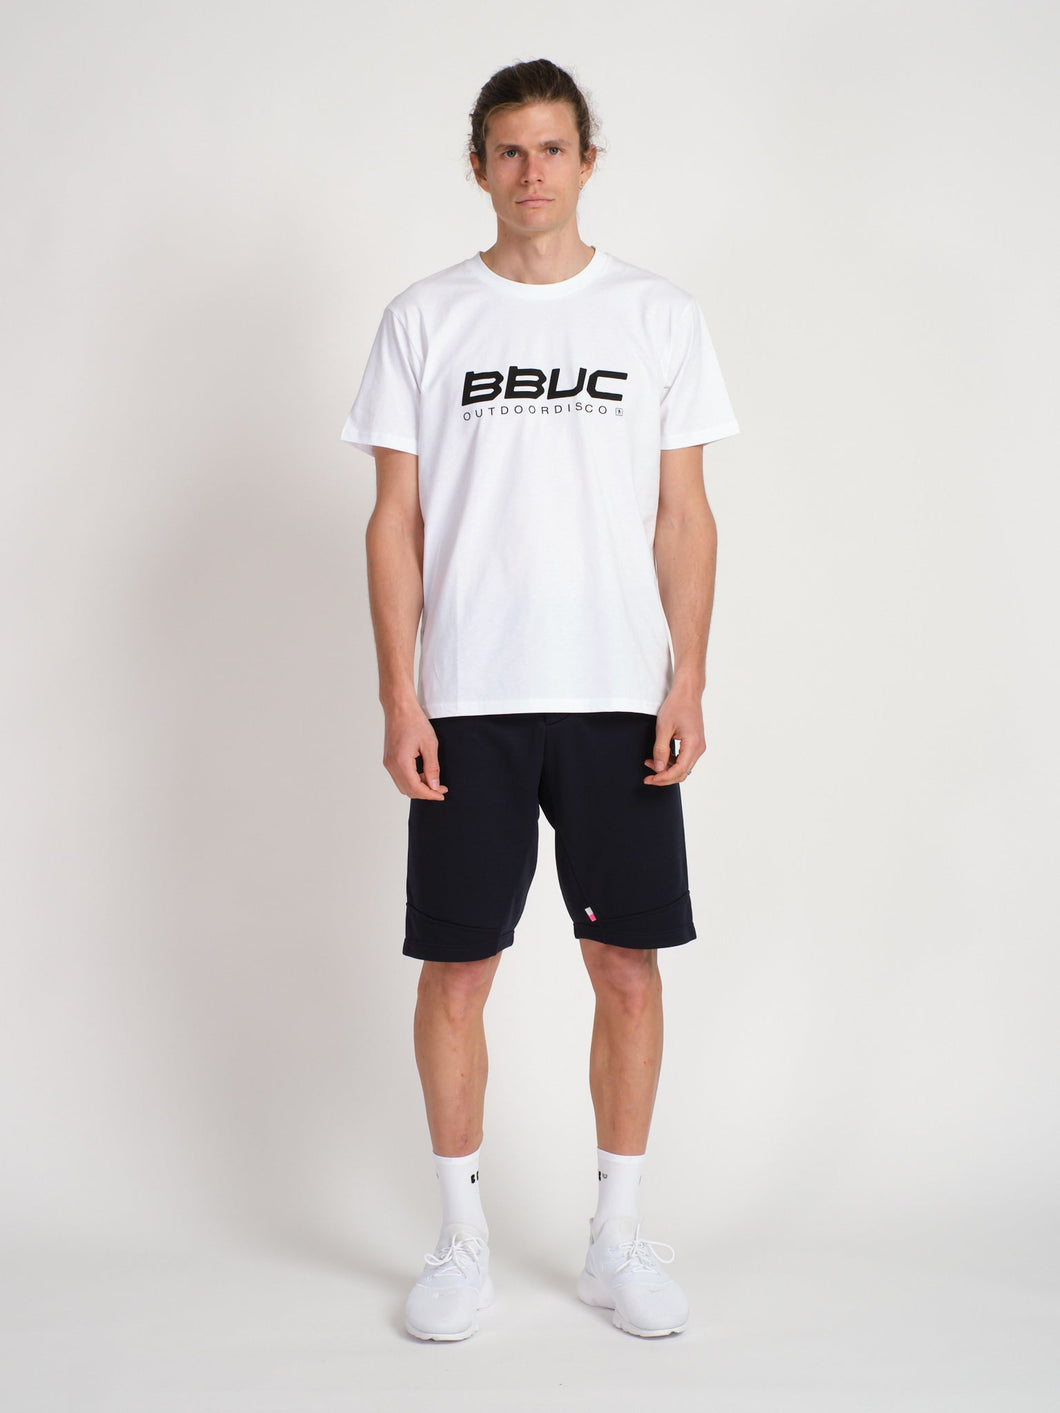 BBUC T-Shirt White Sample